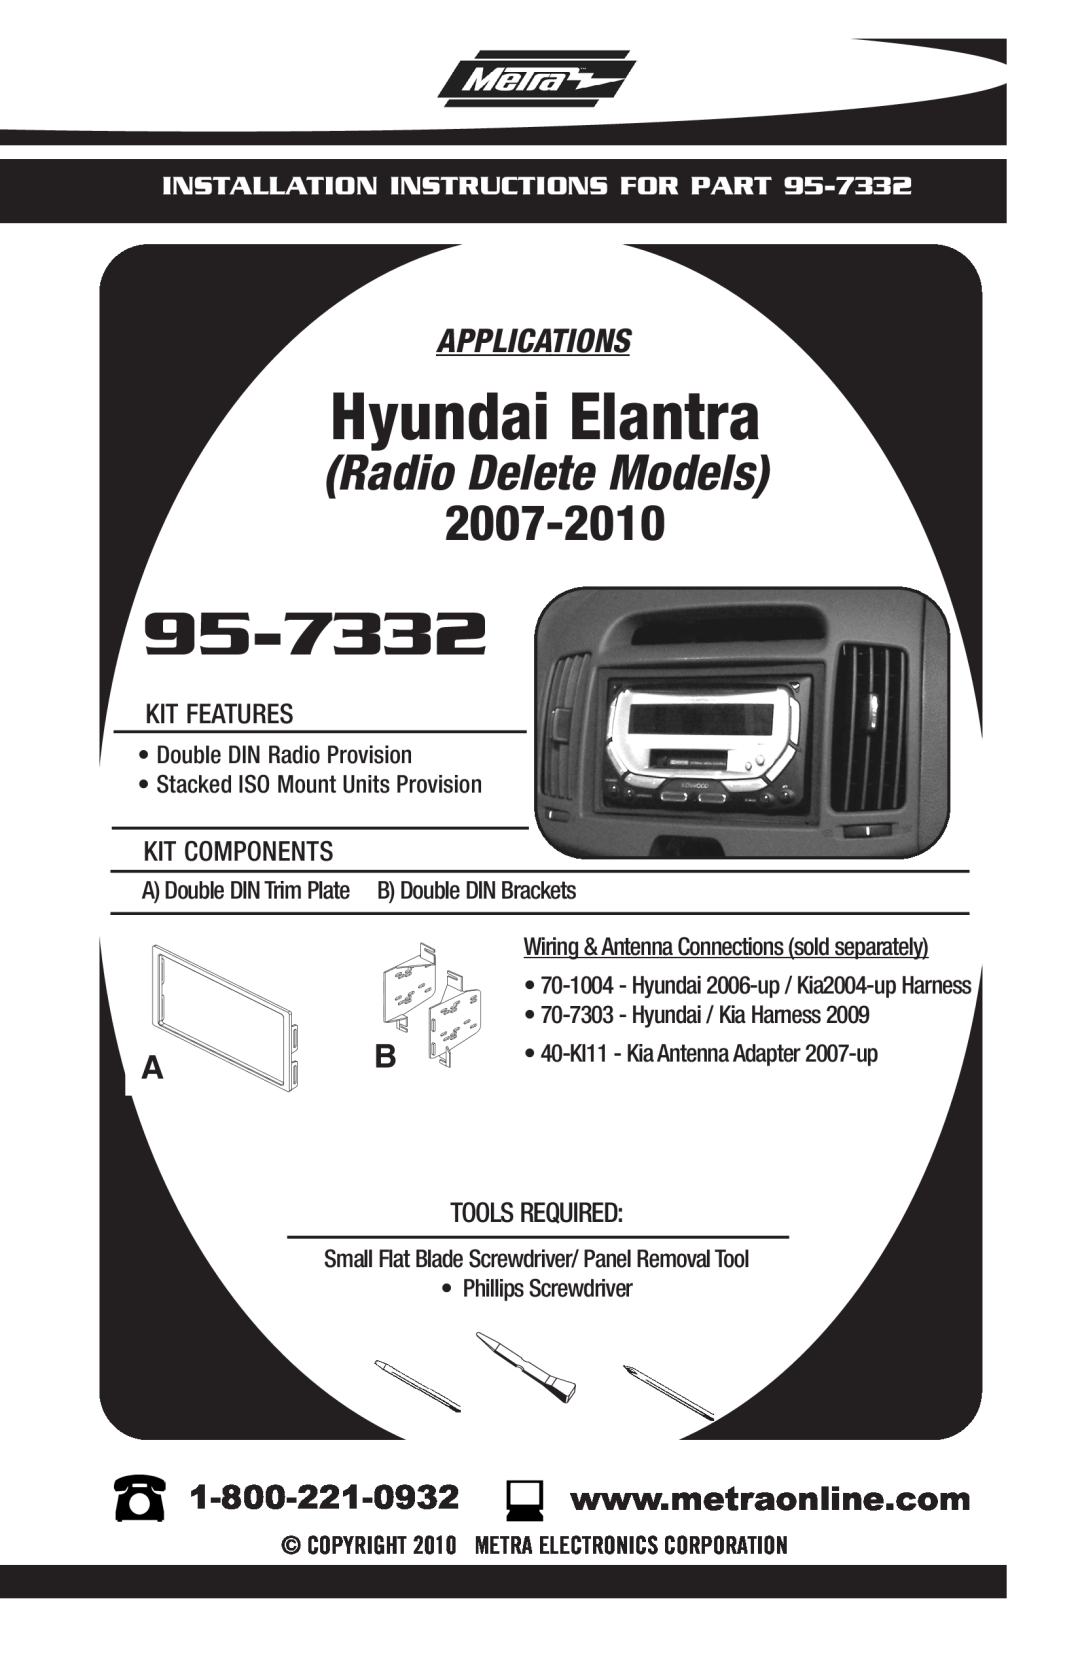 Metra Electronics 95-7332 installation instructions Hyundai Elantra, Radio Delete Models, 2007-2010, Applications 